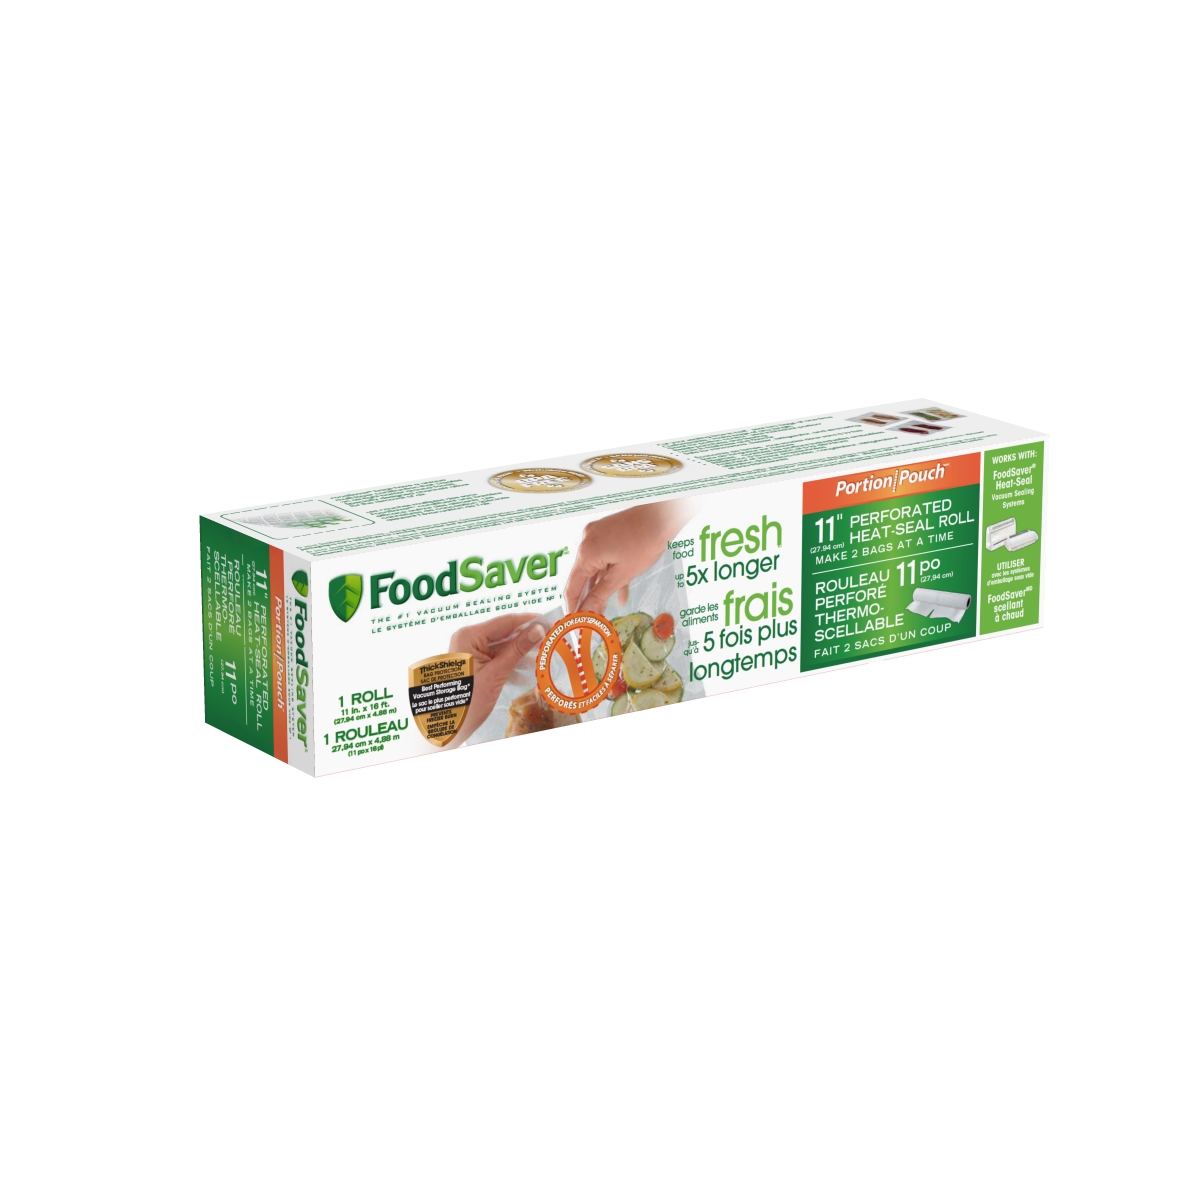 FoodSaver® Portion Pouch™ 11 Heat-Seal Vacuum Sealer Roll, Single  FSFSBF2616-033